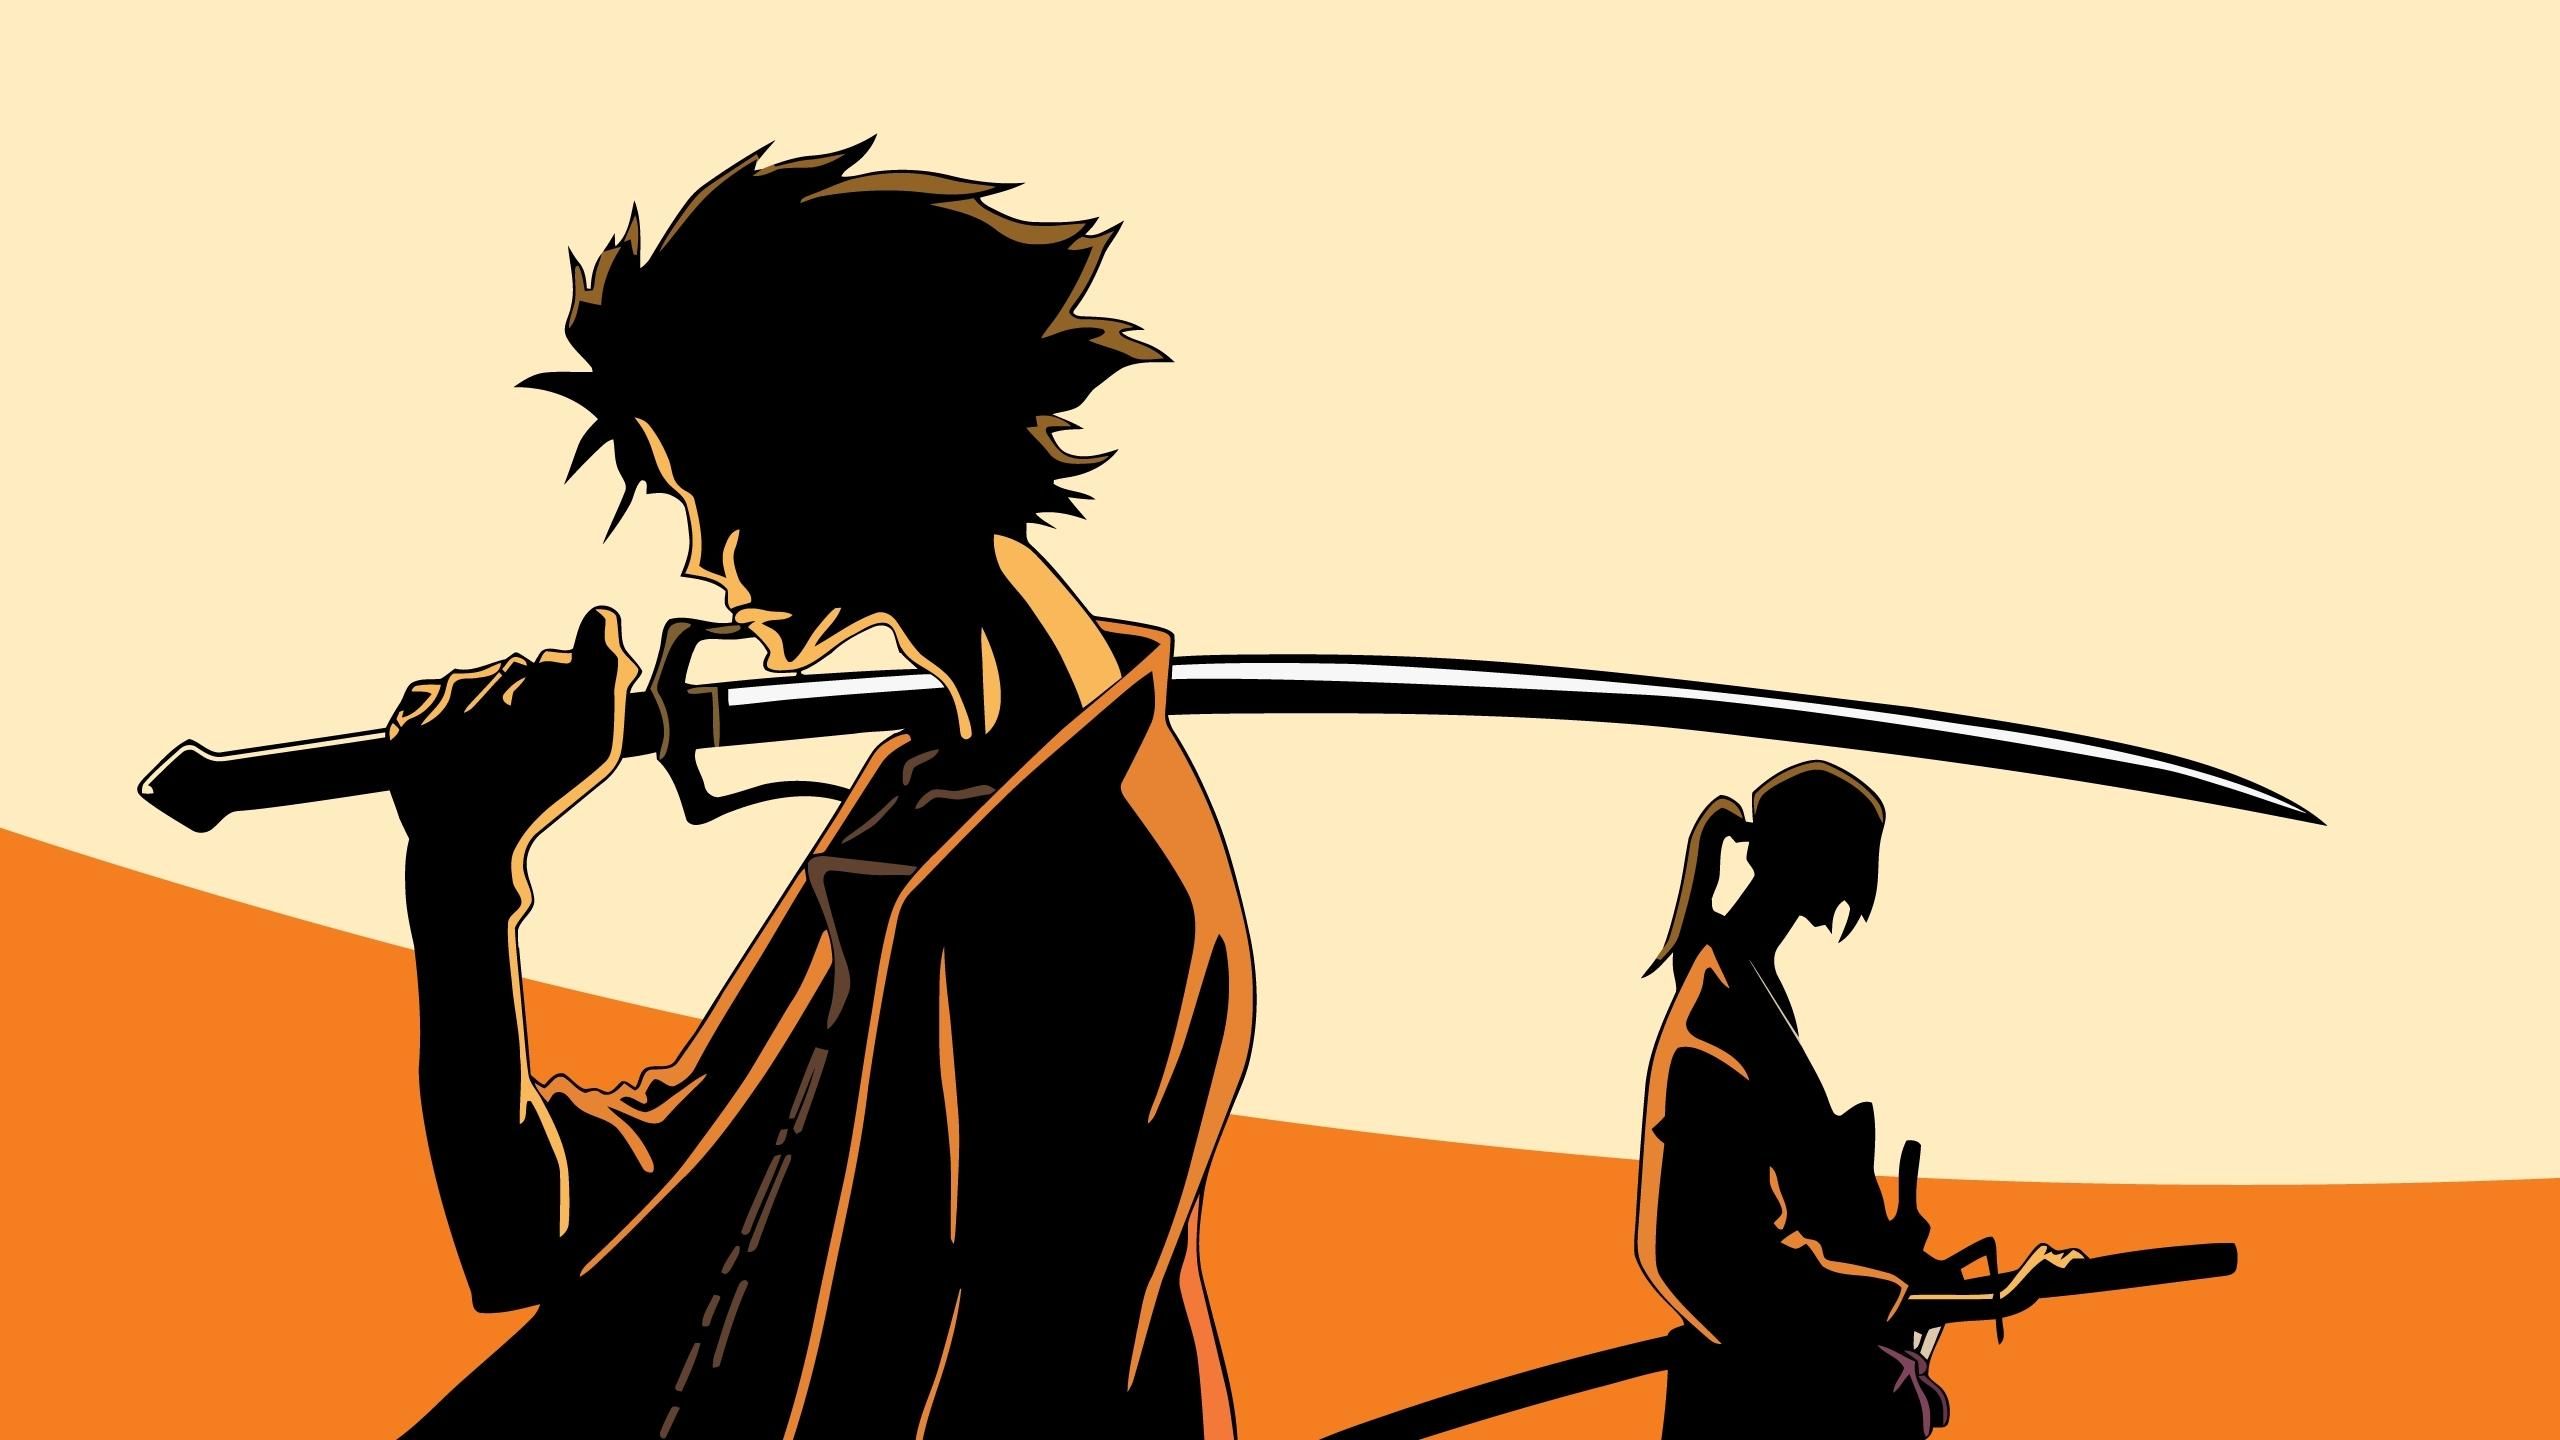 of Anime 4K wallpaper for your desktop or mobile screen